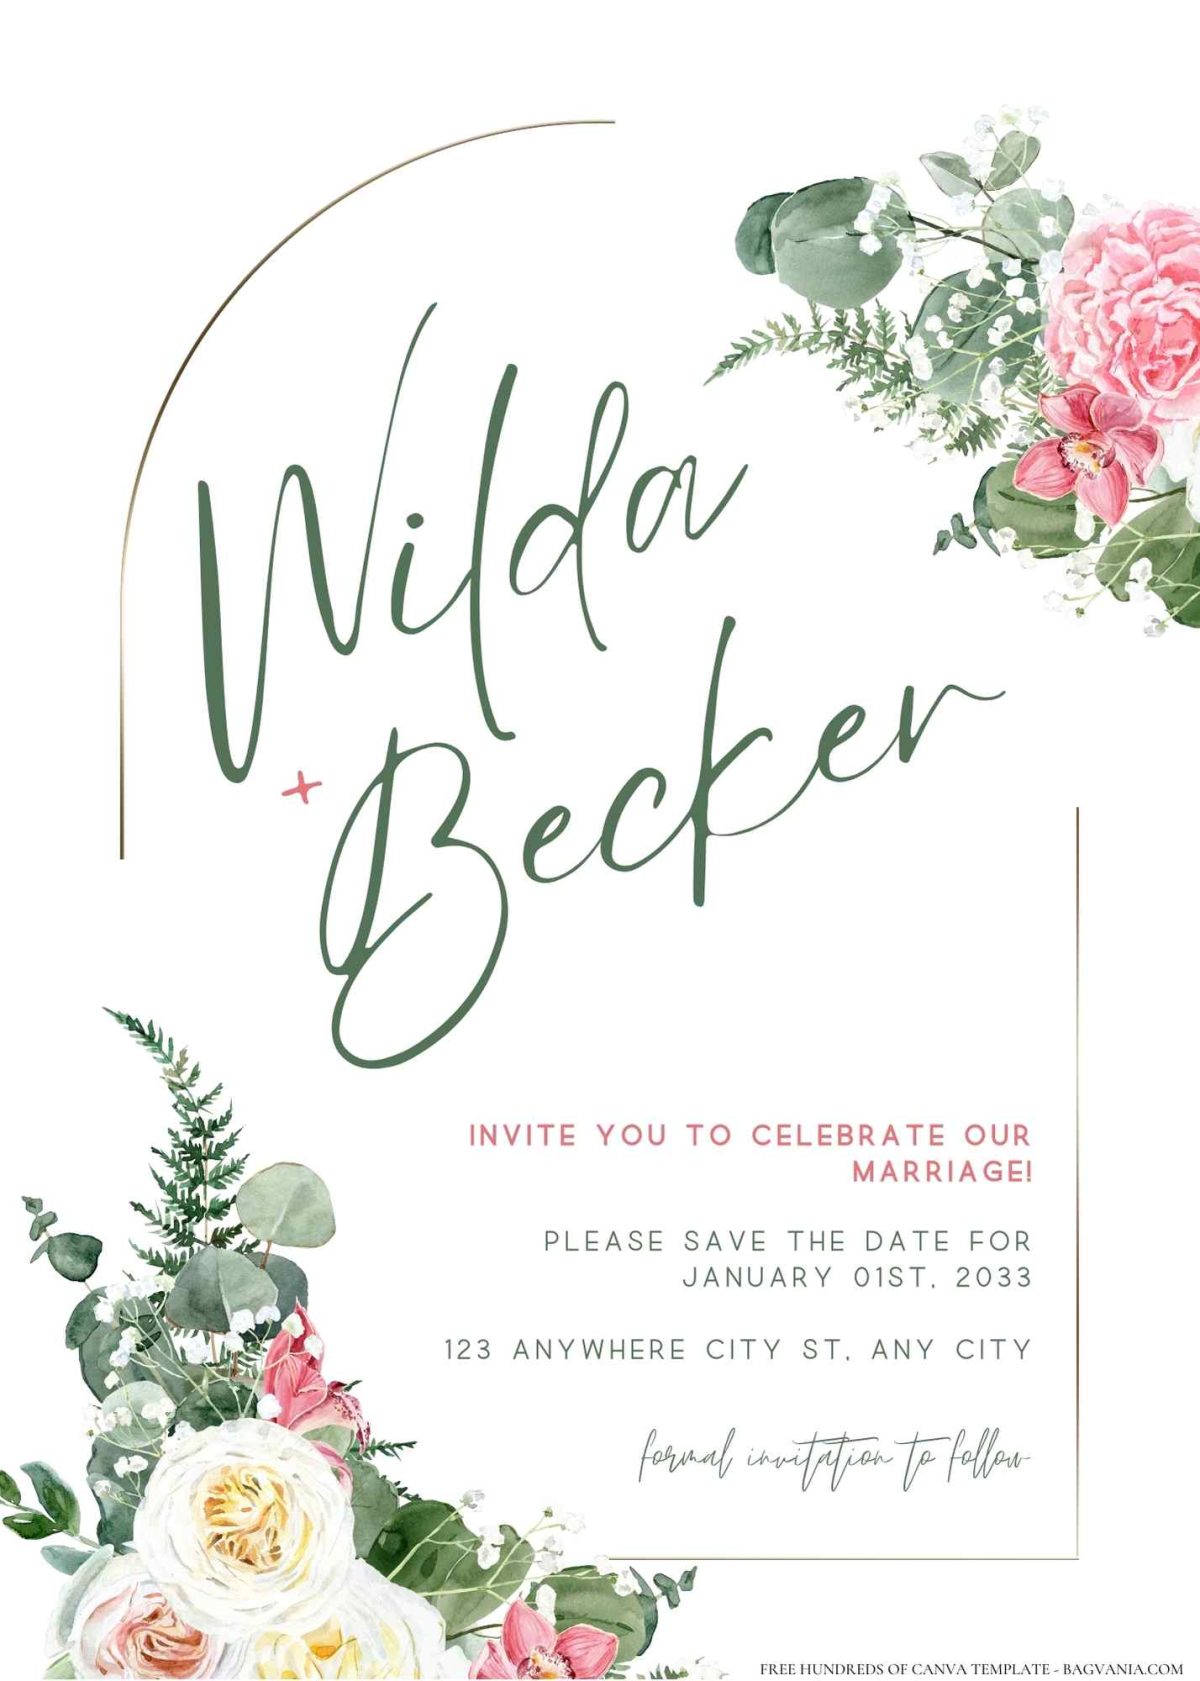 FREE Editable garden-inspired with greenery wedding invitation